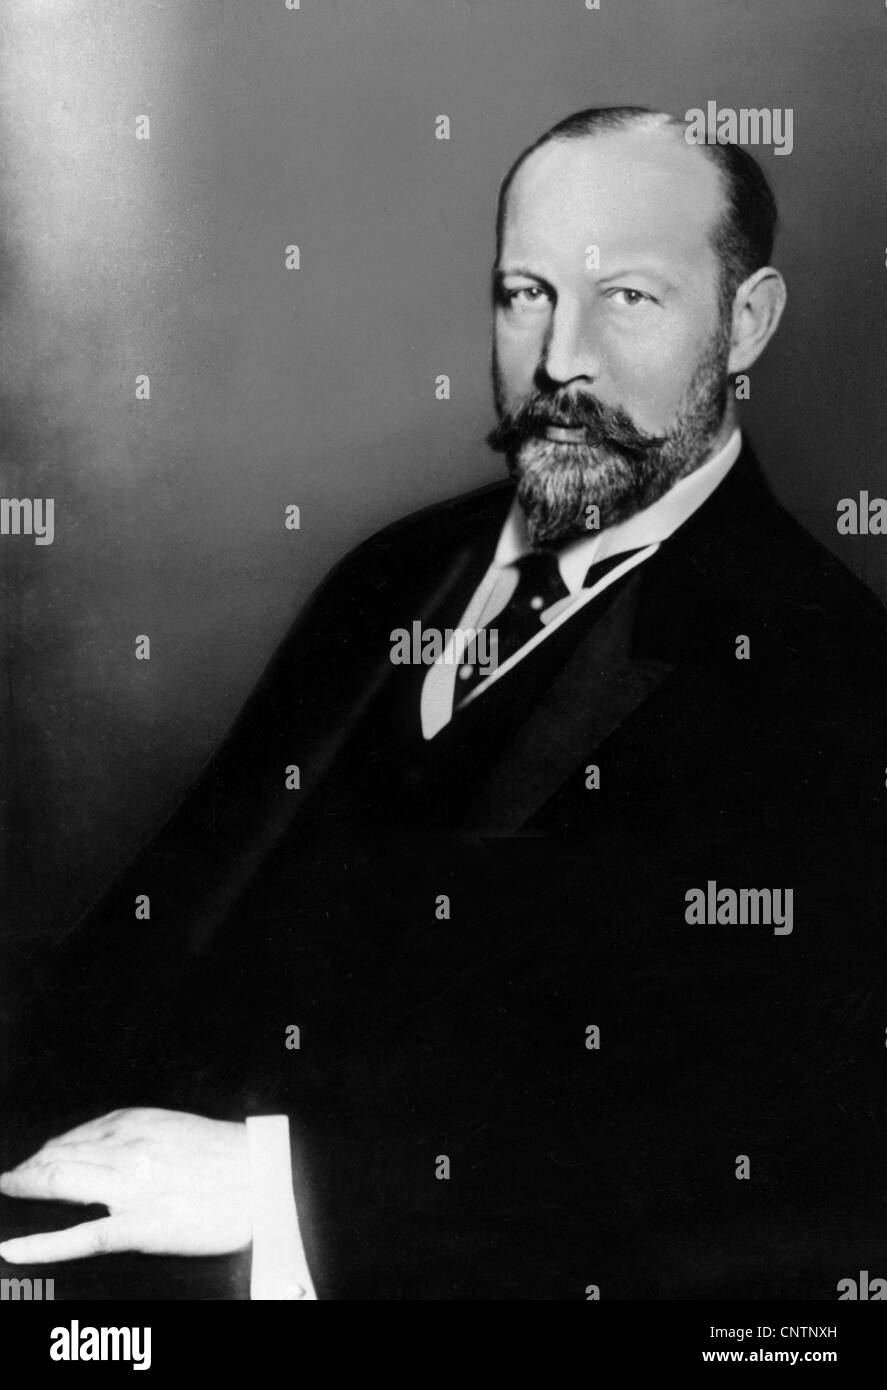 Lingner, Karl August, 21.12.1861 - 5.6.1916, German entrepreneur, founder of the Lingner + Krafft GmbH in 1888 (nowadays Lingner Werke), portrait, circa 1900, Stock Photo